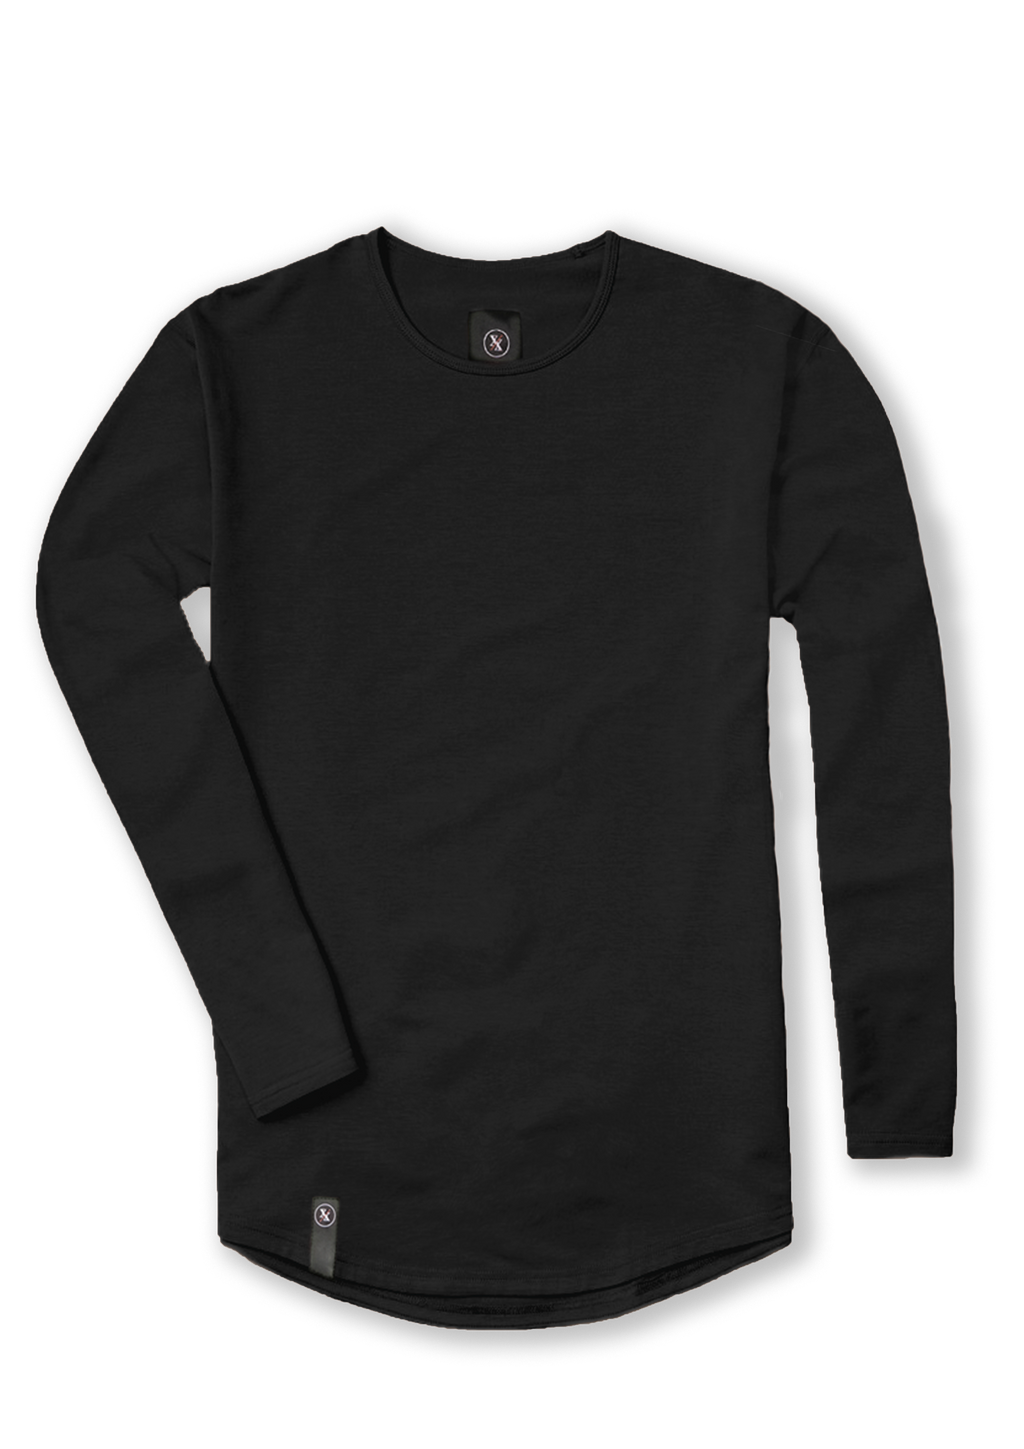 Men's Long Sleeve Cotton T-shirts Drop Cut with Curved Hem - Black / S